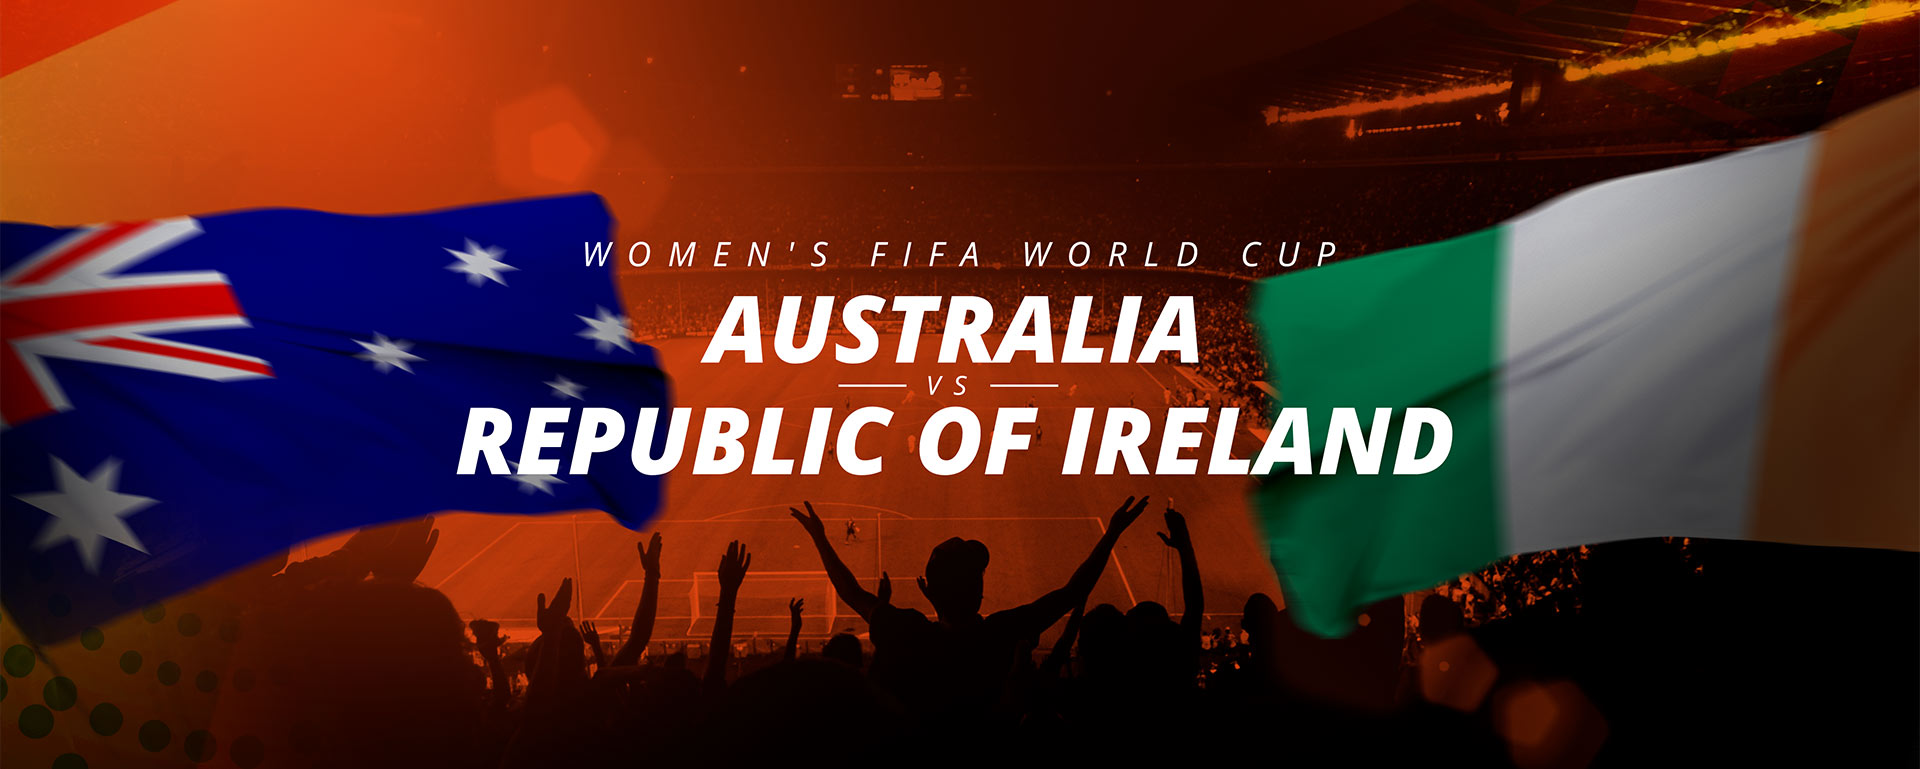 WOMEN’S FIFA WORLD CUP: AUSTRALIA V REPUBLIC OF IRELAND